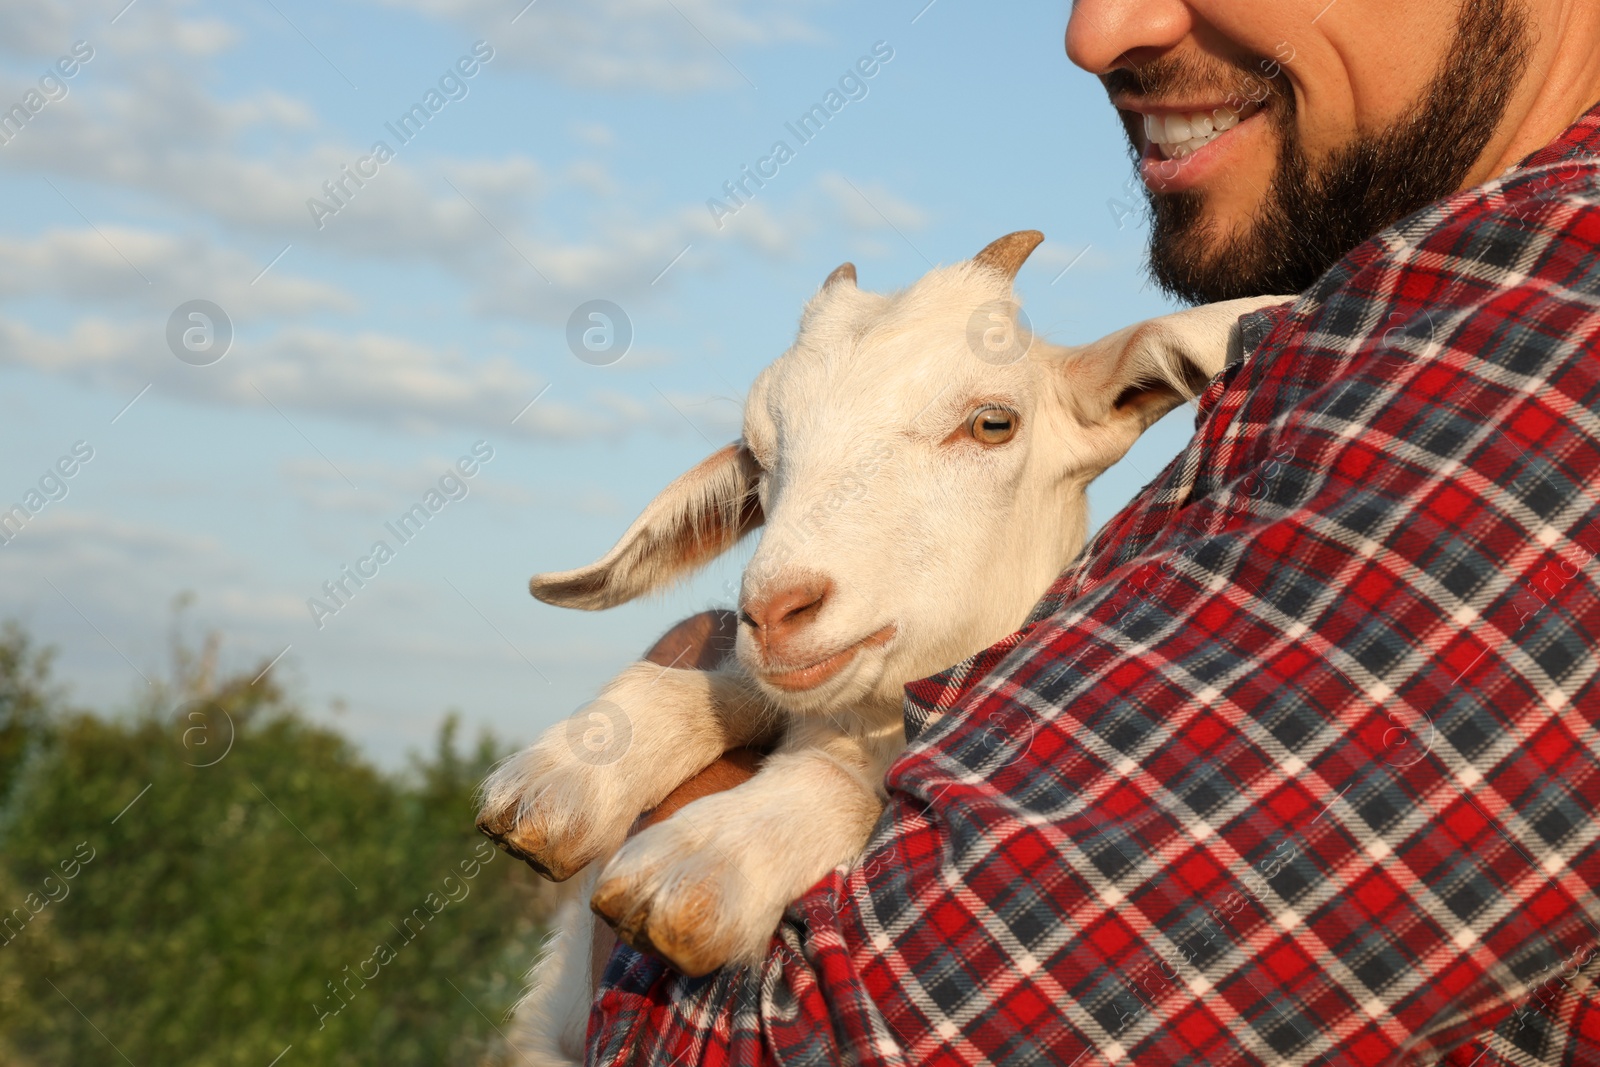 Photo of Man with baby goat at farm, closeup. Animal husbandry